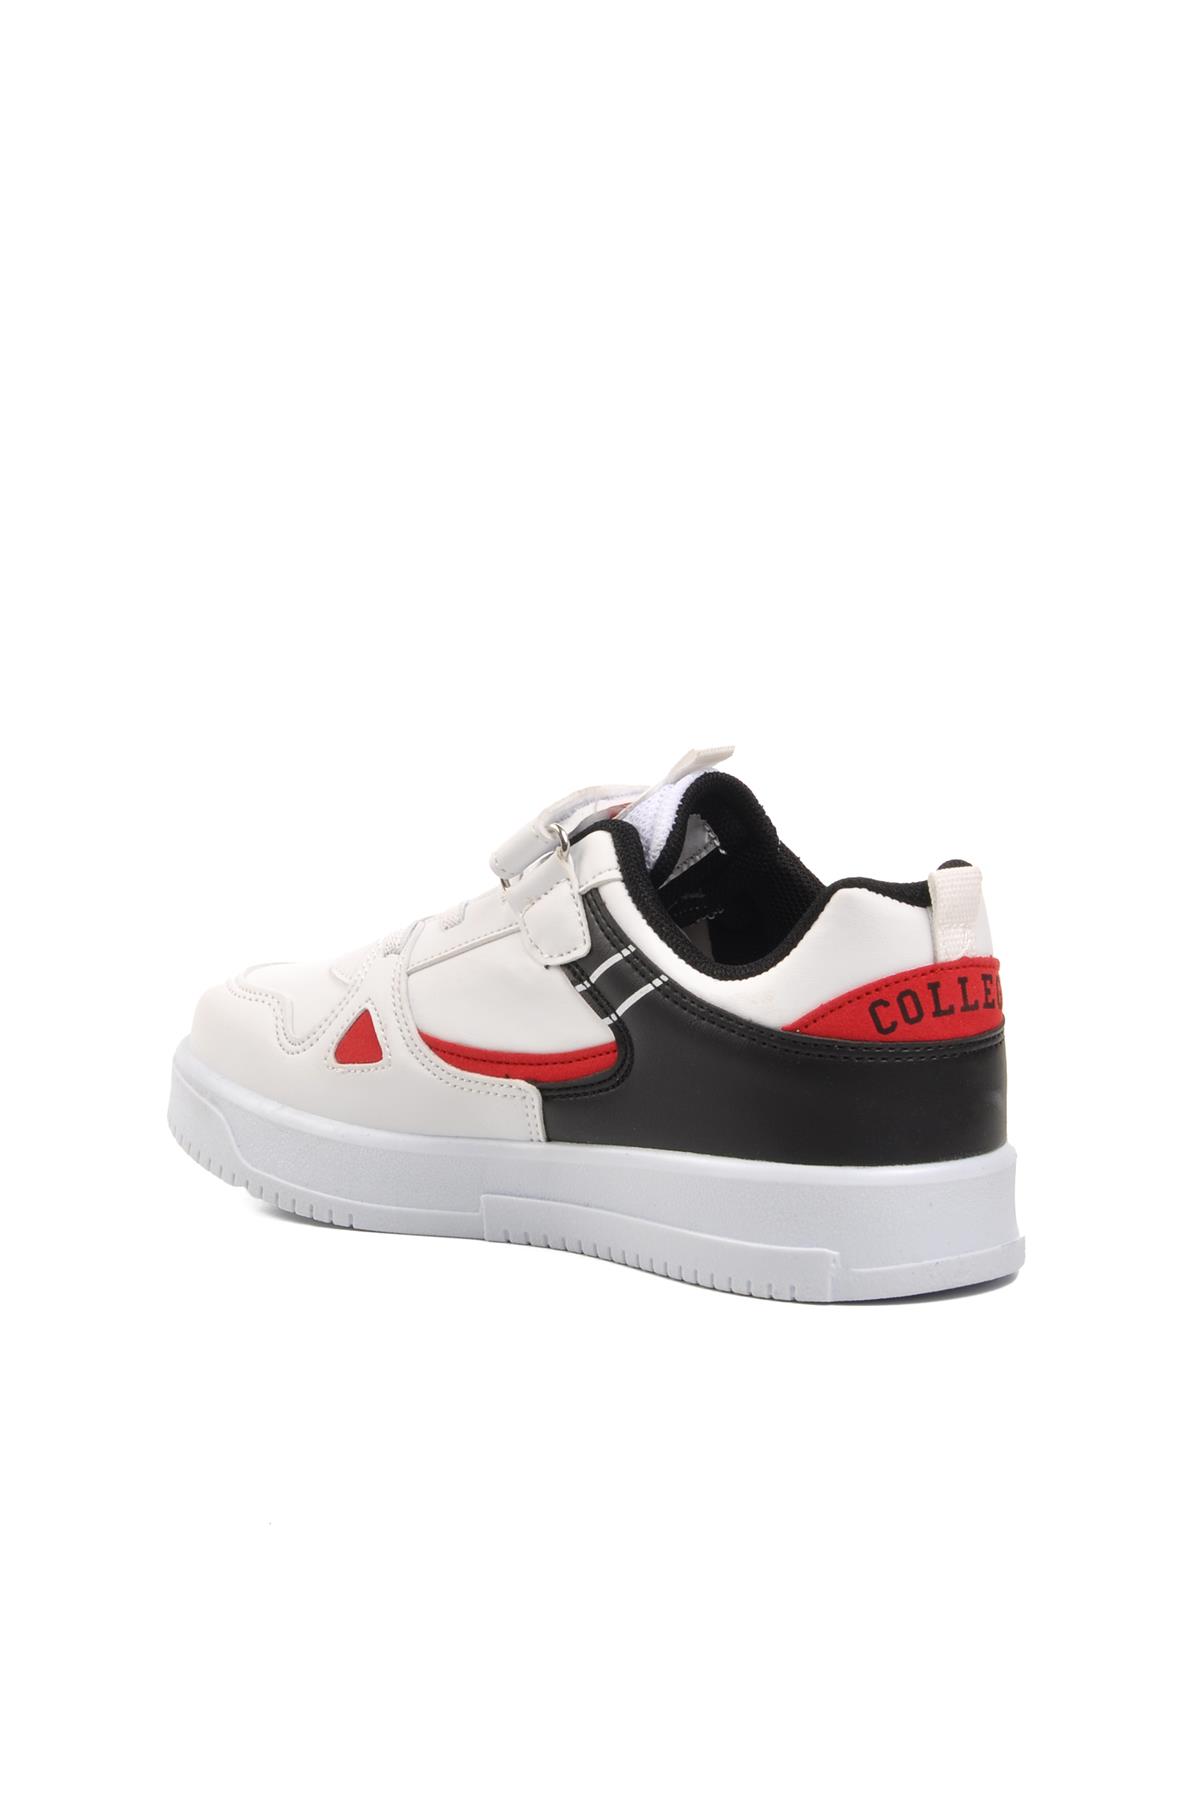 Pepino 1564-F Beyaz-Siyah-Kırmızı Cırtlı Çocuk Sneaker Pepino Çocuk Spor Ayakkabı